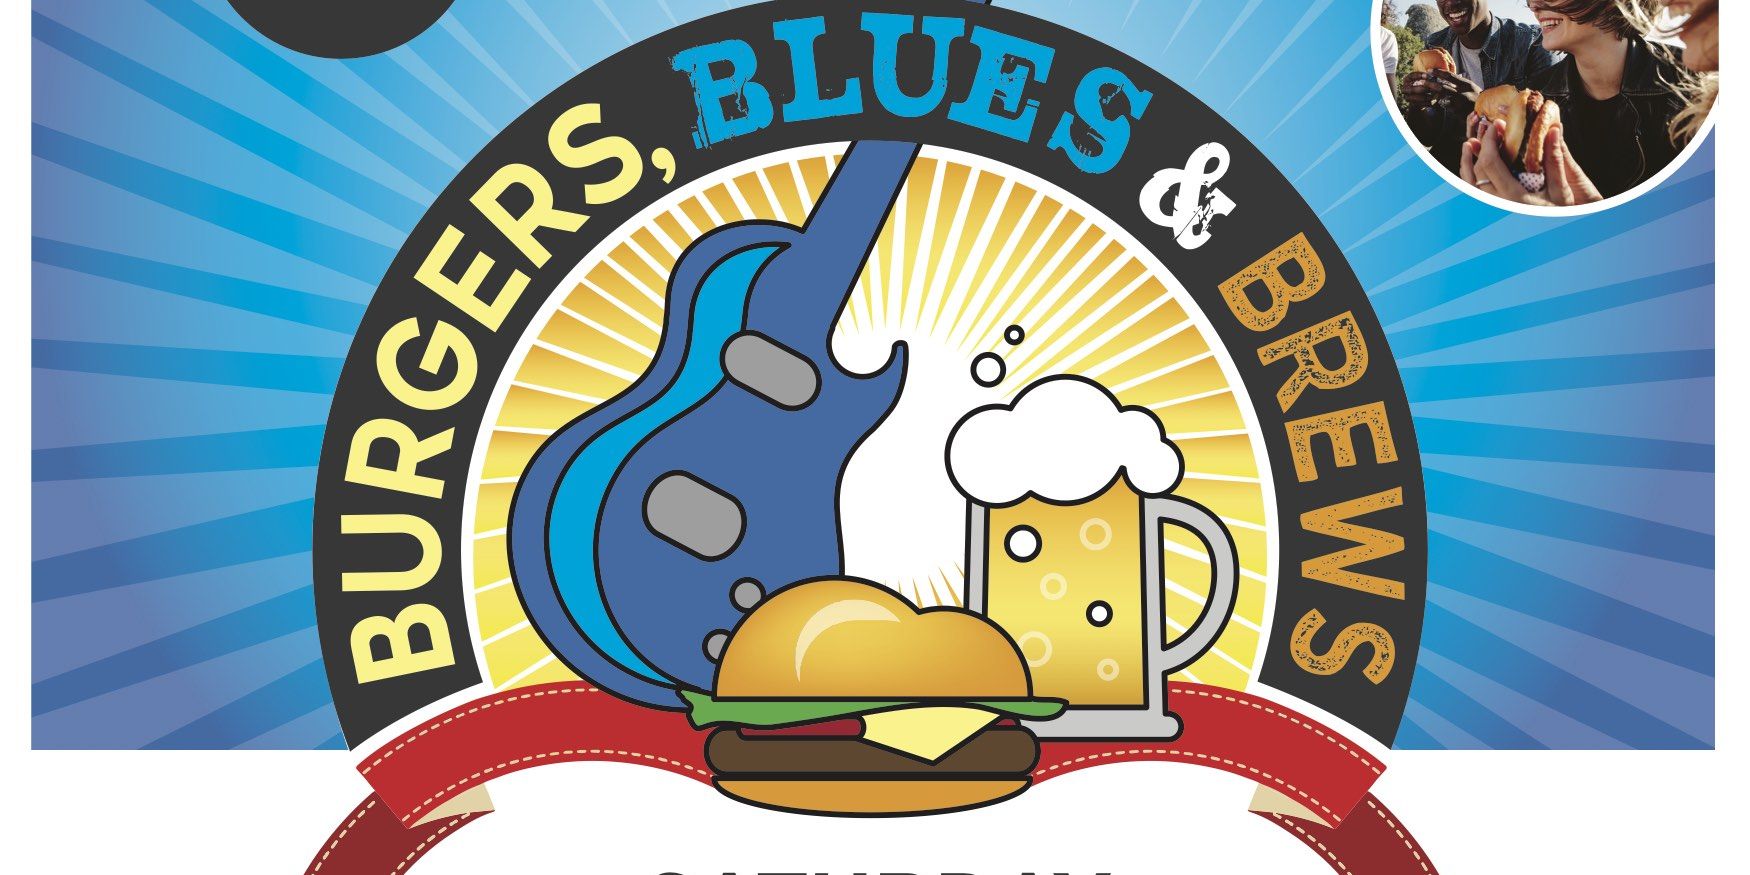 BURGERS, BREWS & BLUES promotional image